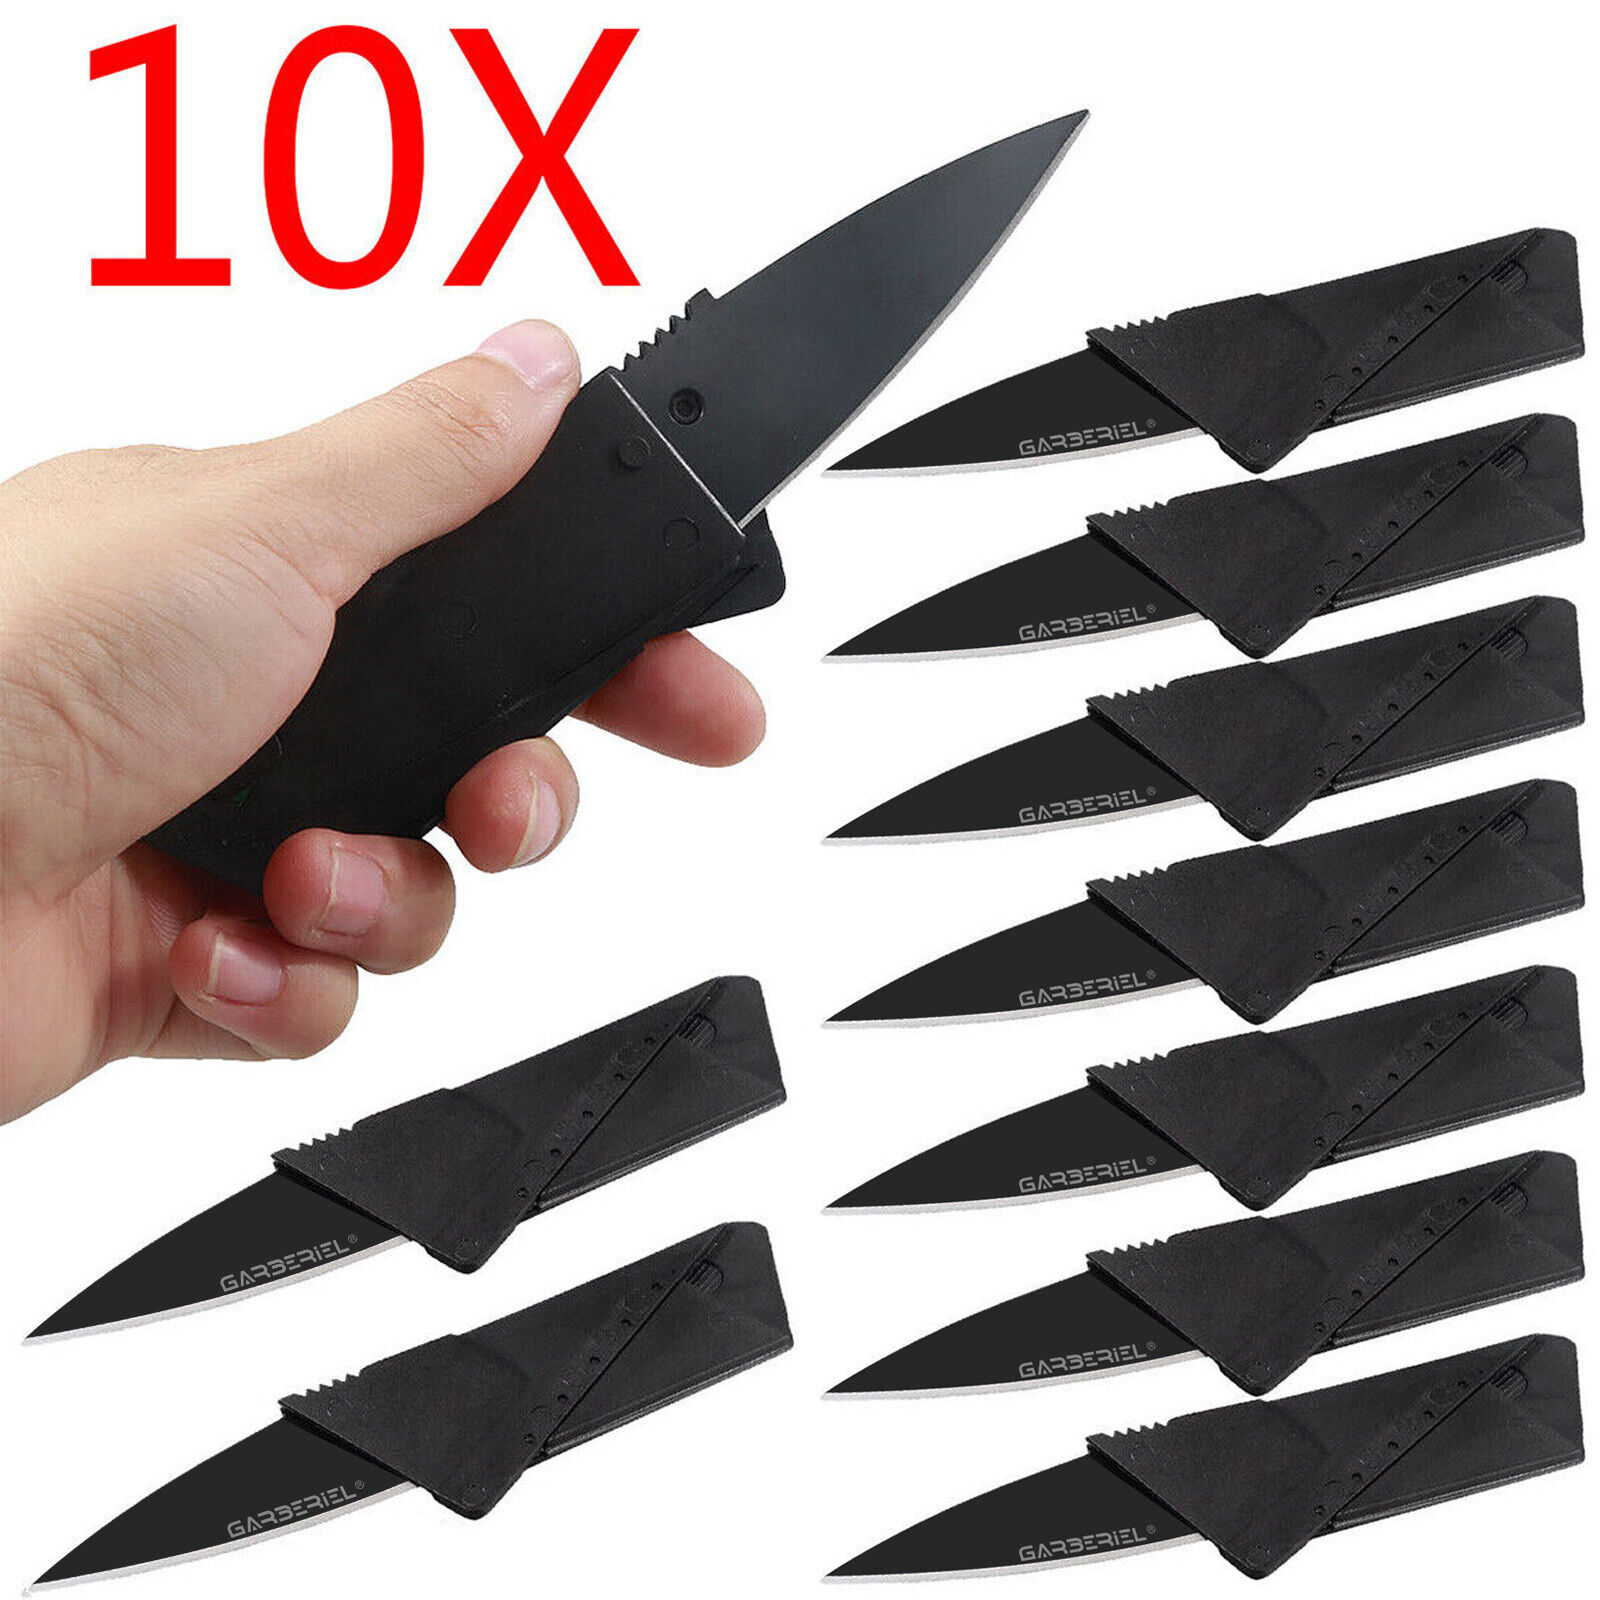 10x Credit Card Folding Knife Black Wallet Sharp Thin Knives For Hunting Camping